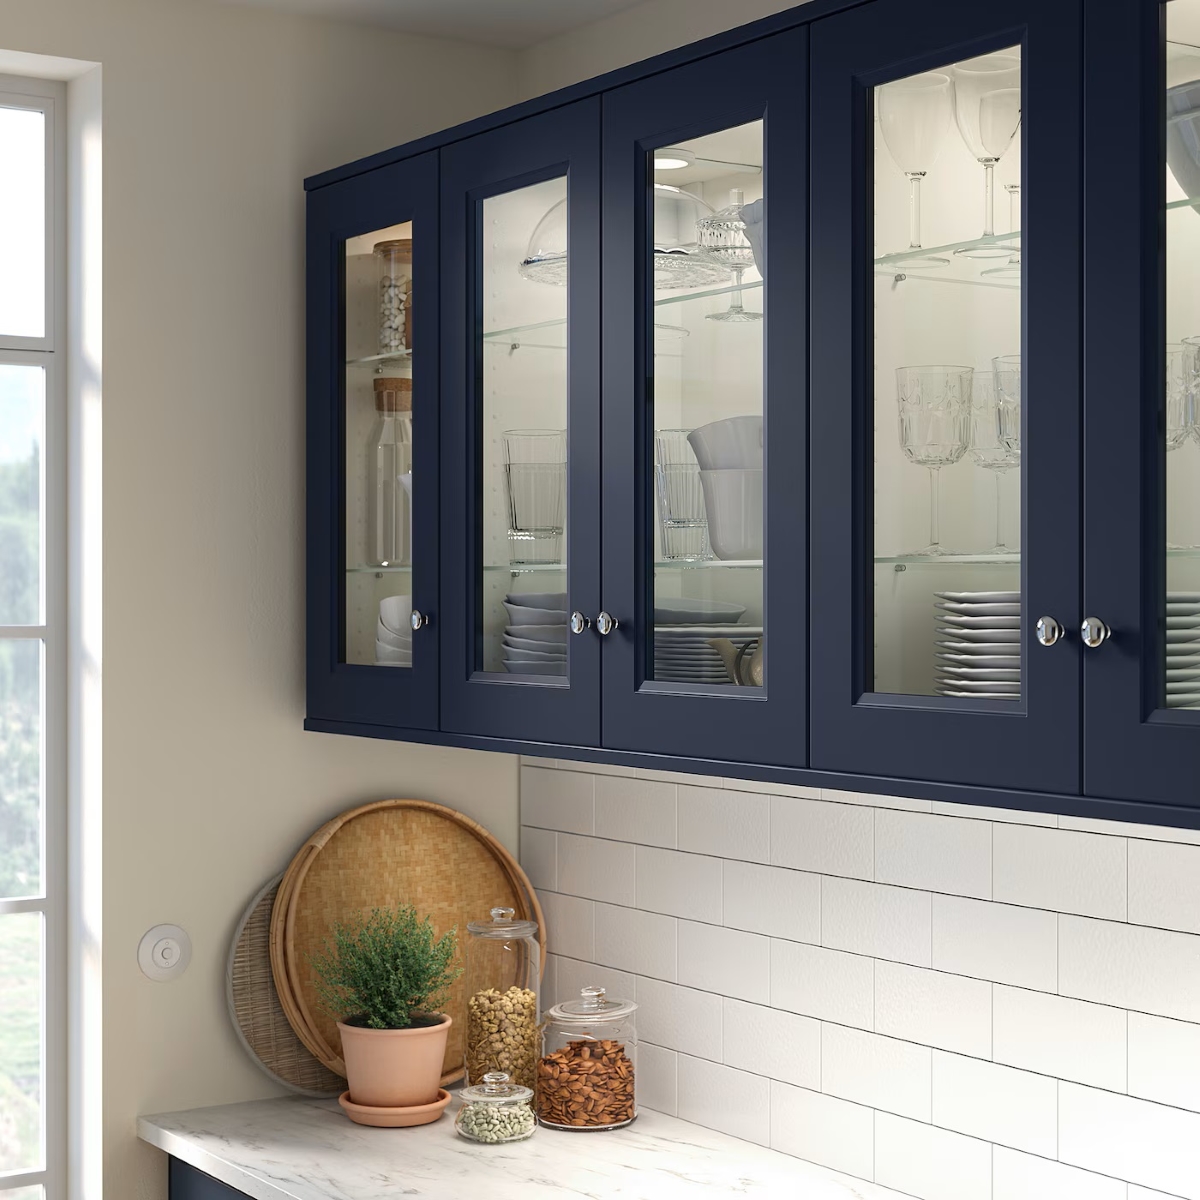 Dark blue kitchen cabinets with glass doors.